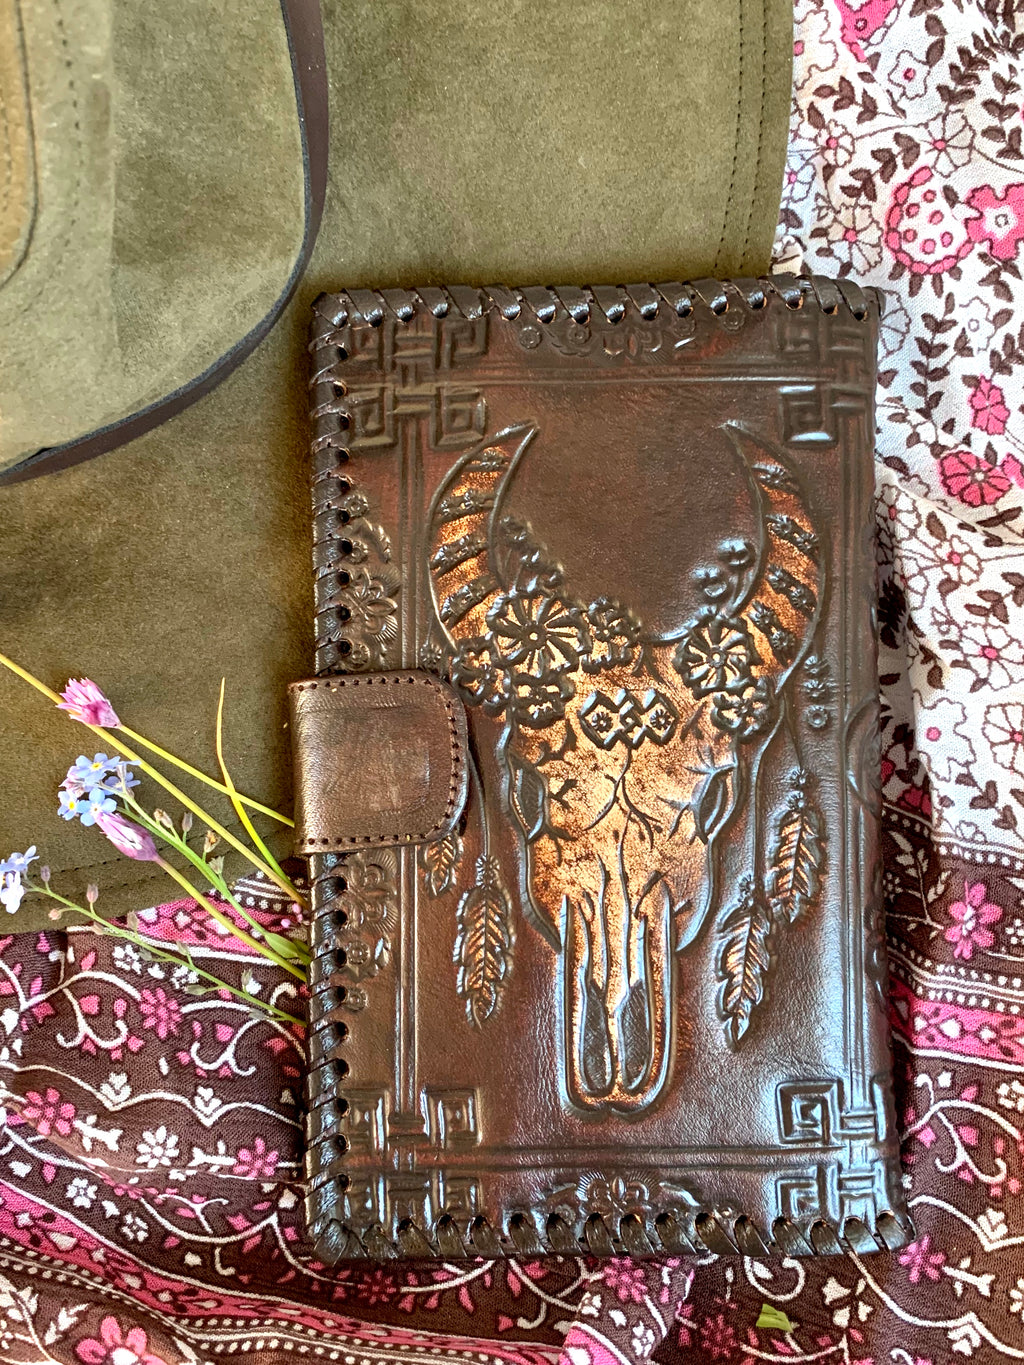 The gypsy Traveler Wallet